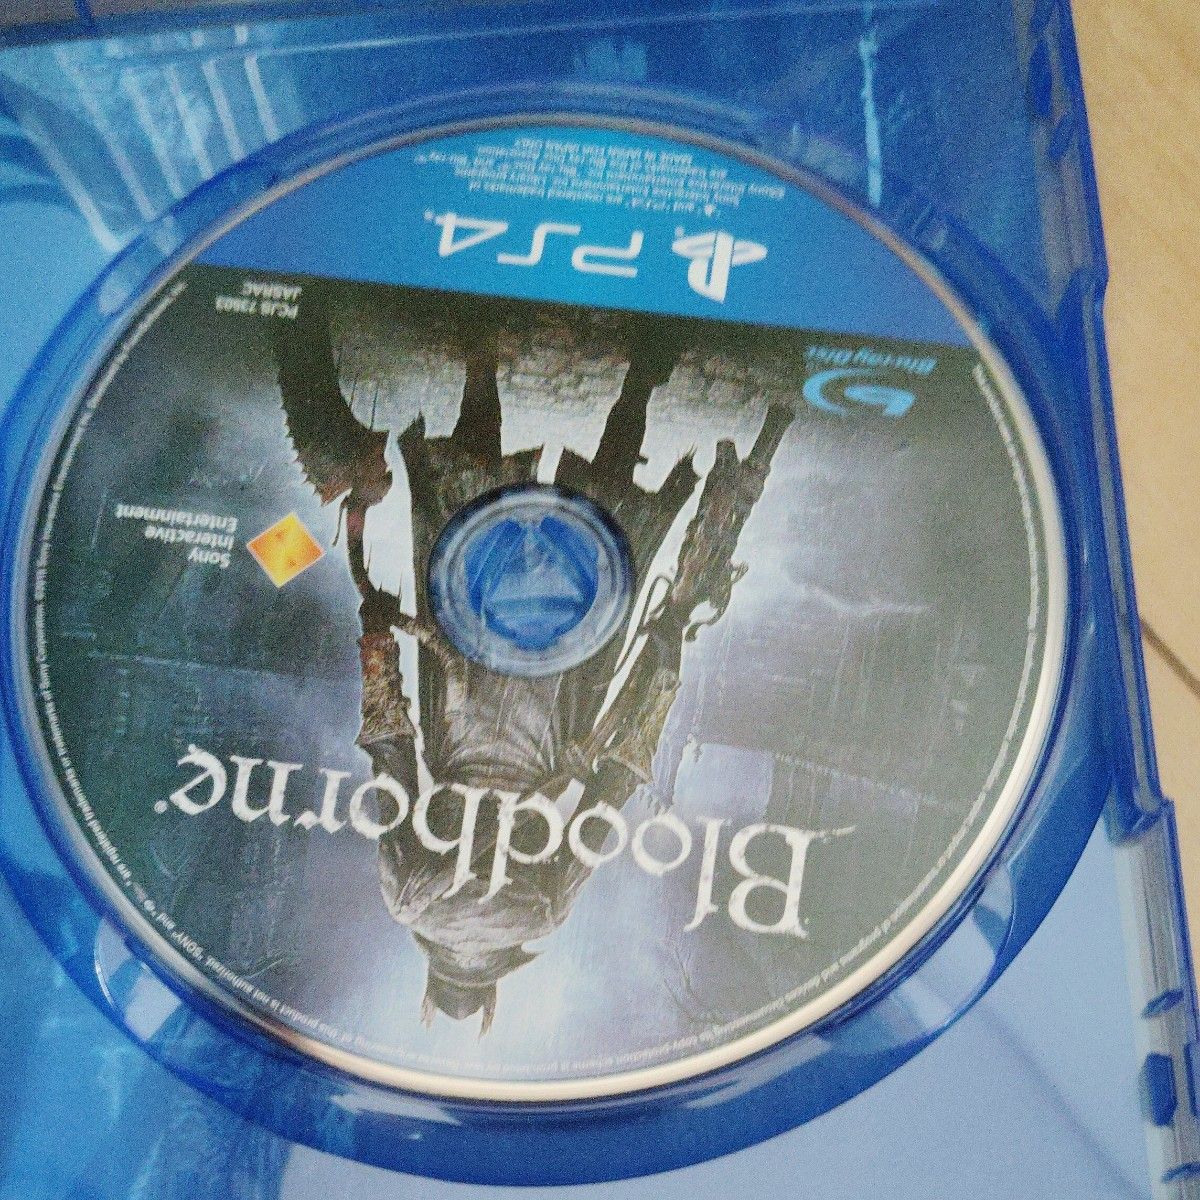 【PS4】 Bloodborne [PlayStation Hits]